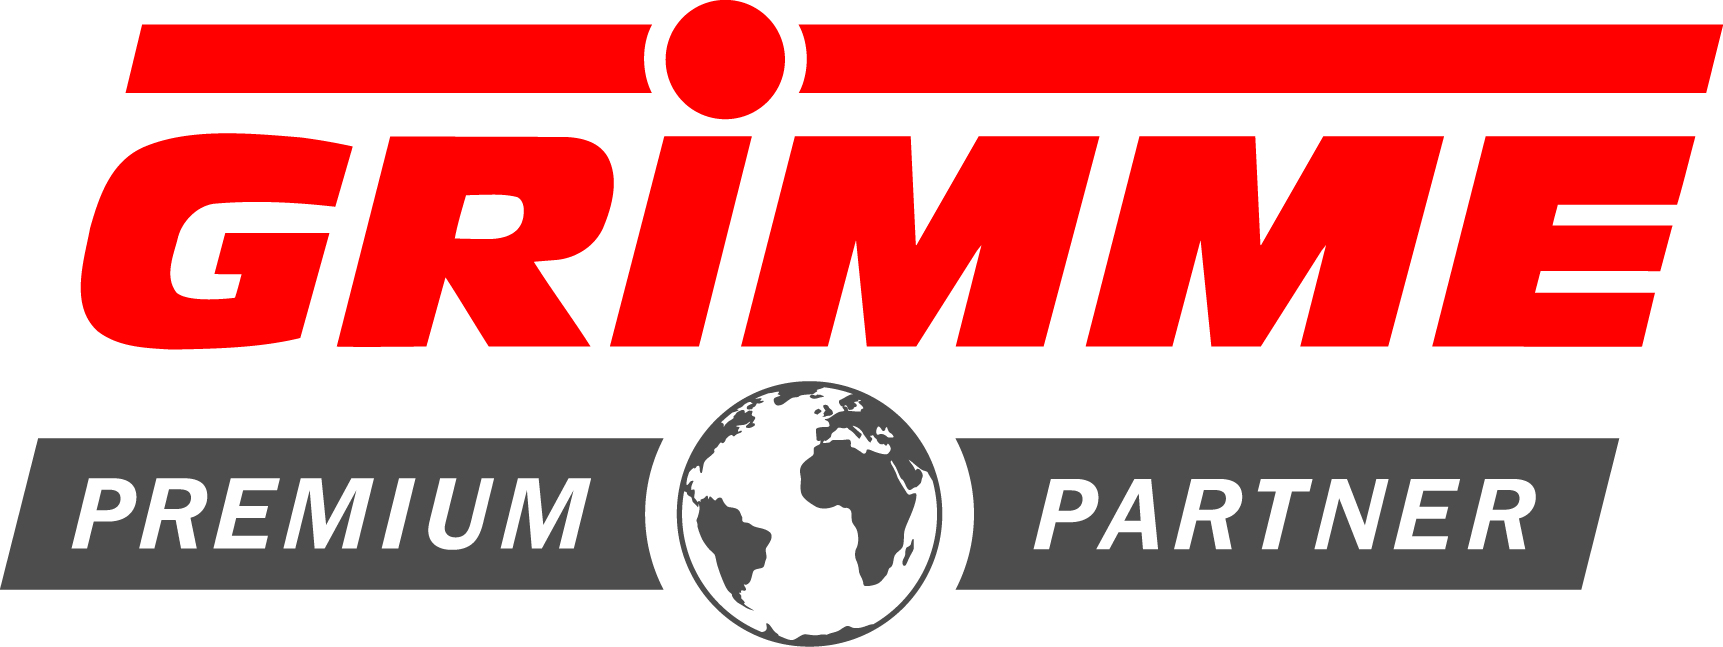 Grimme Logo PremiumPartner CMYK RZ